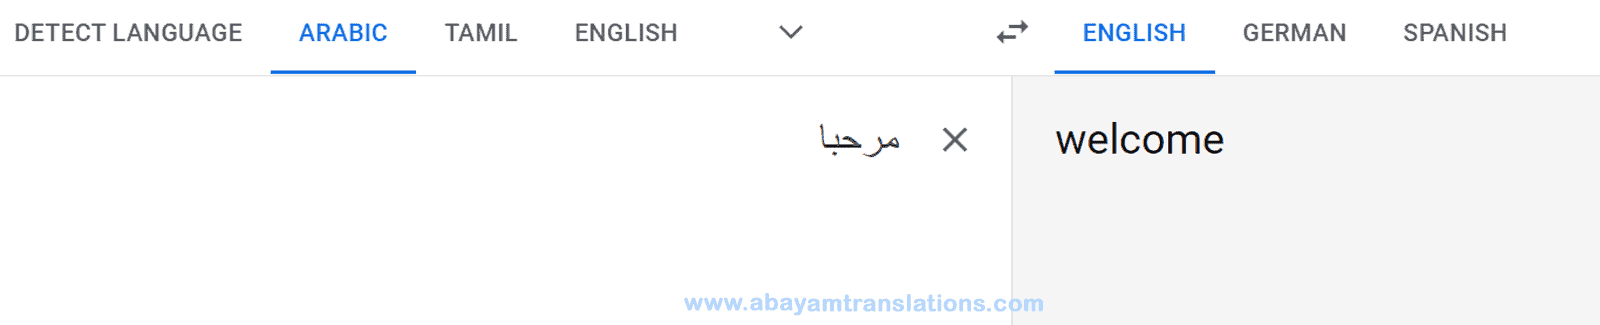 Arabic to English Translation App